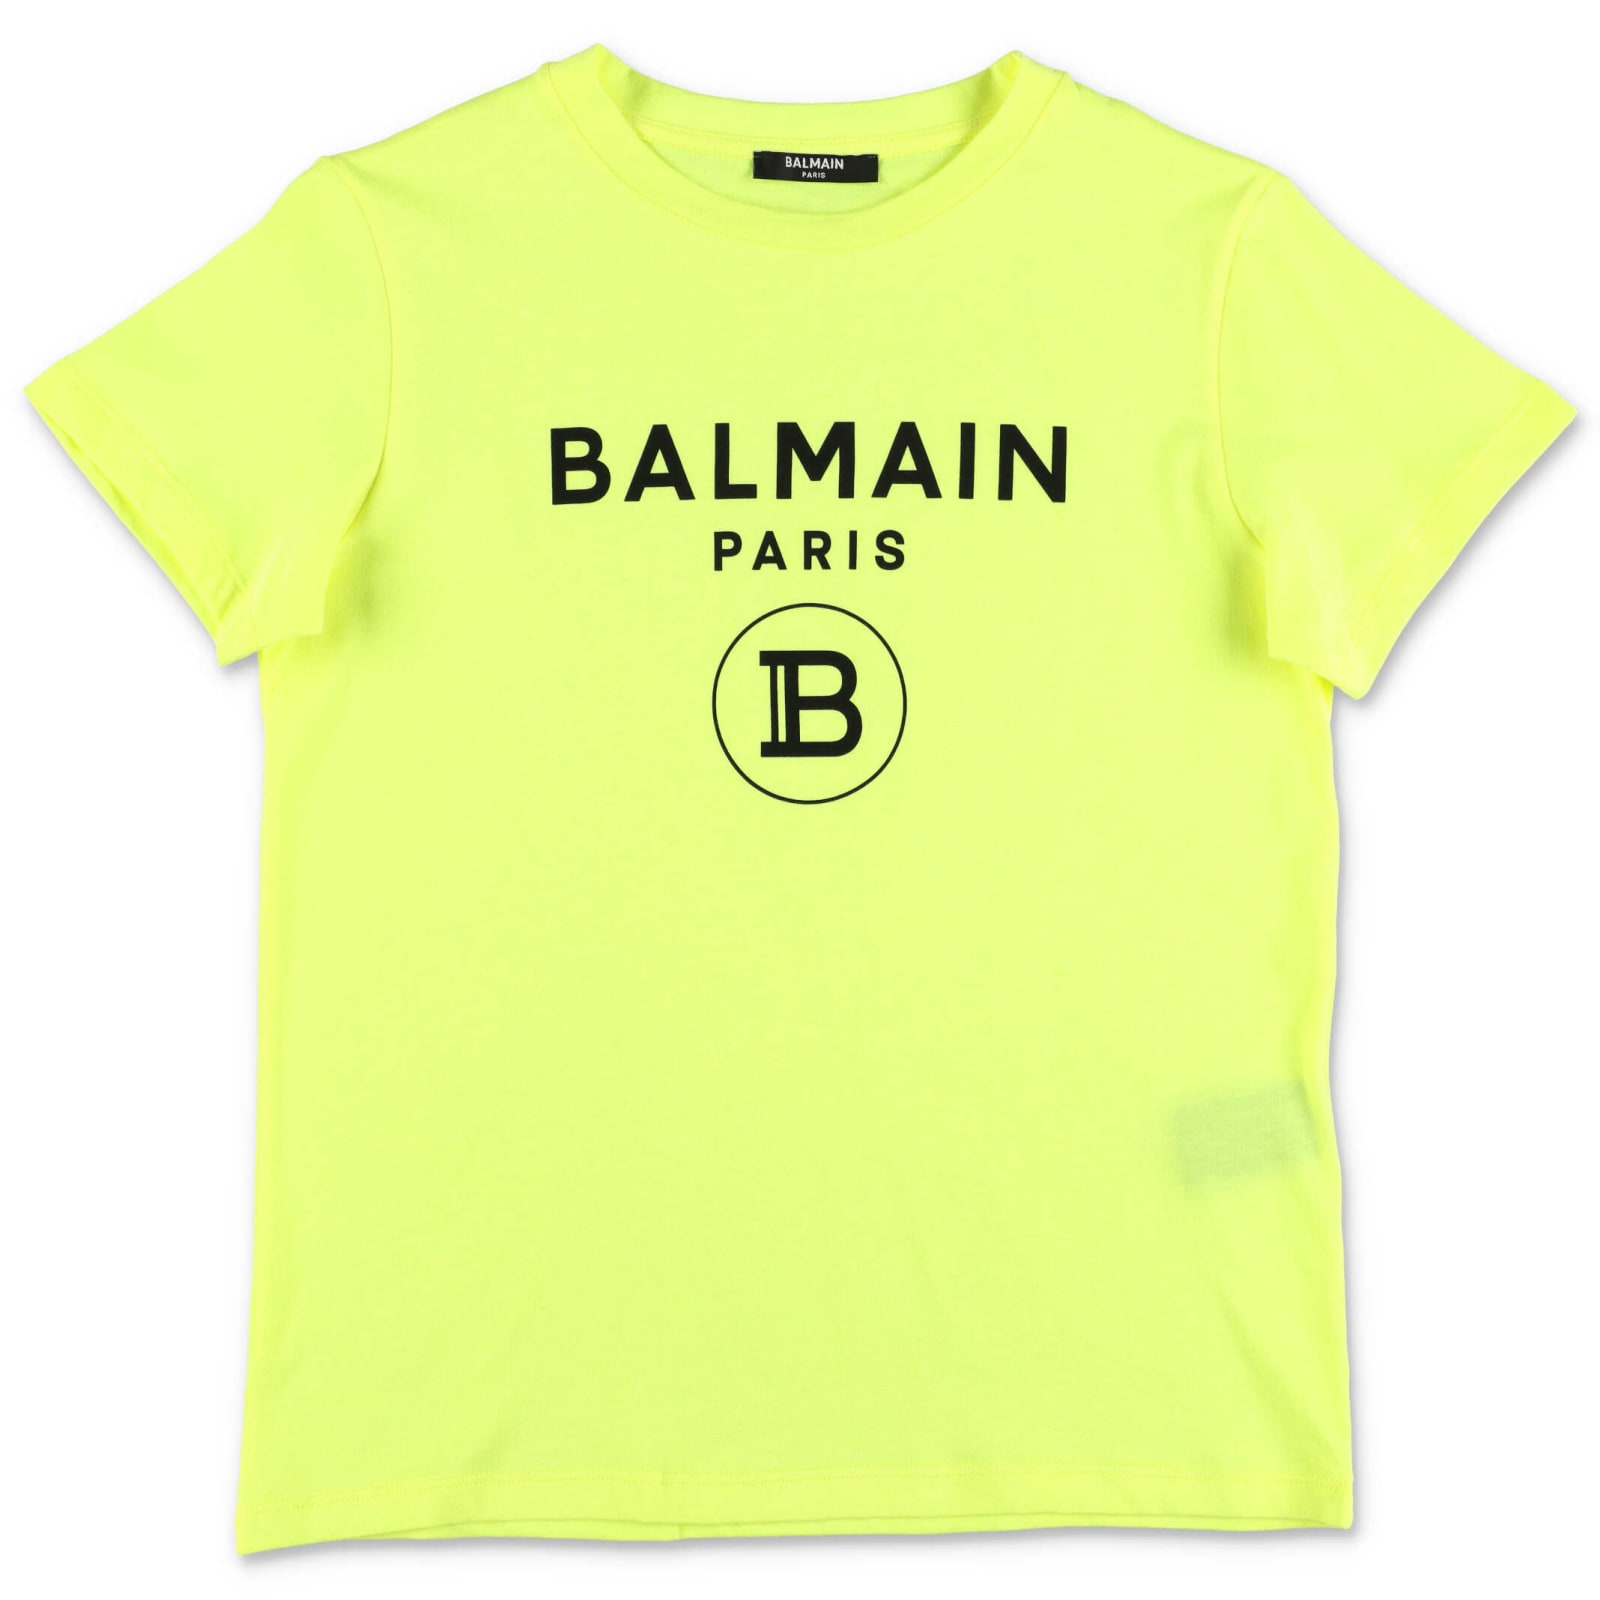 Balmain T-shirt Giallo Fluo In Jersey Di Cotone